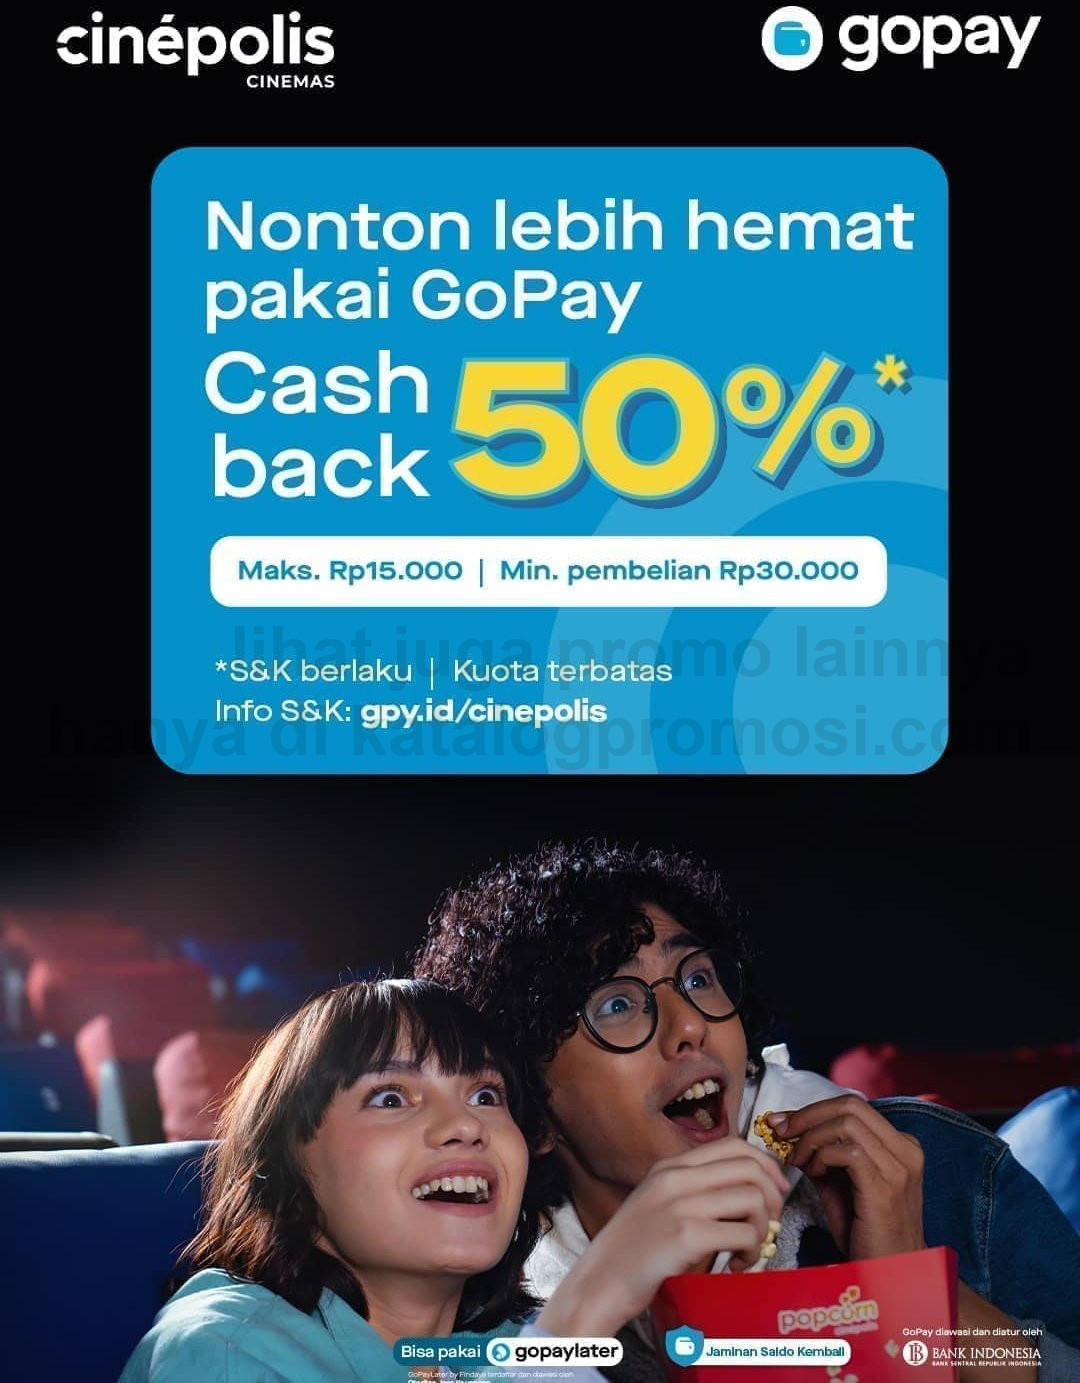 Promo CINEPOLIS GOPAY - CASHBACK 50% untuk pembelian tiket Nonton